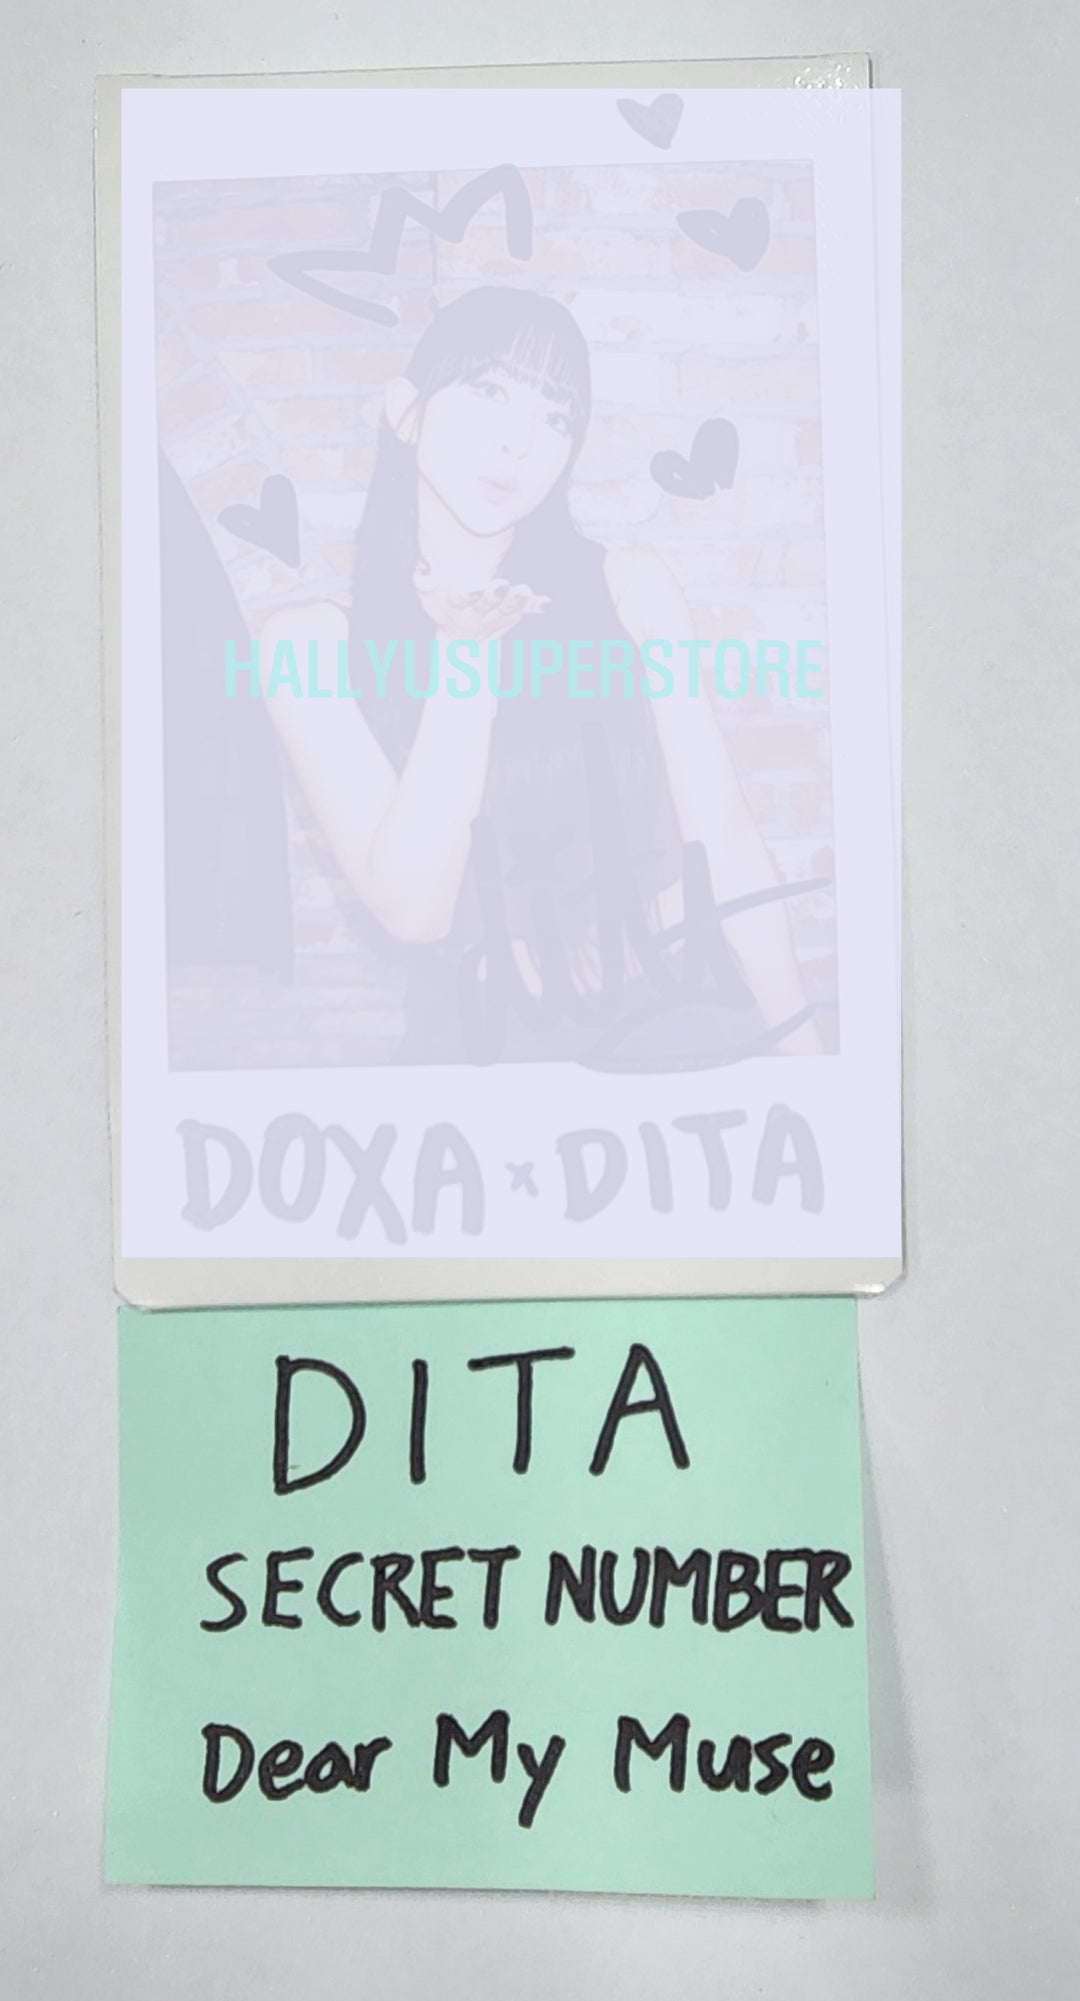 DITA (Of Secret Number) "DOXA" - Hand Autographed(Signed) Polaroid